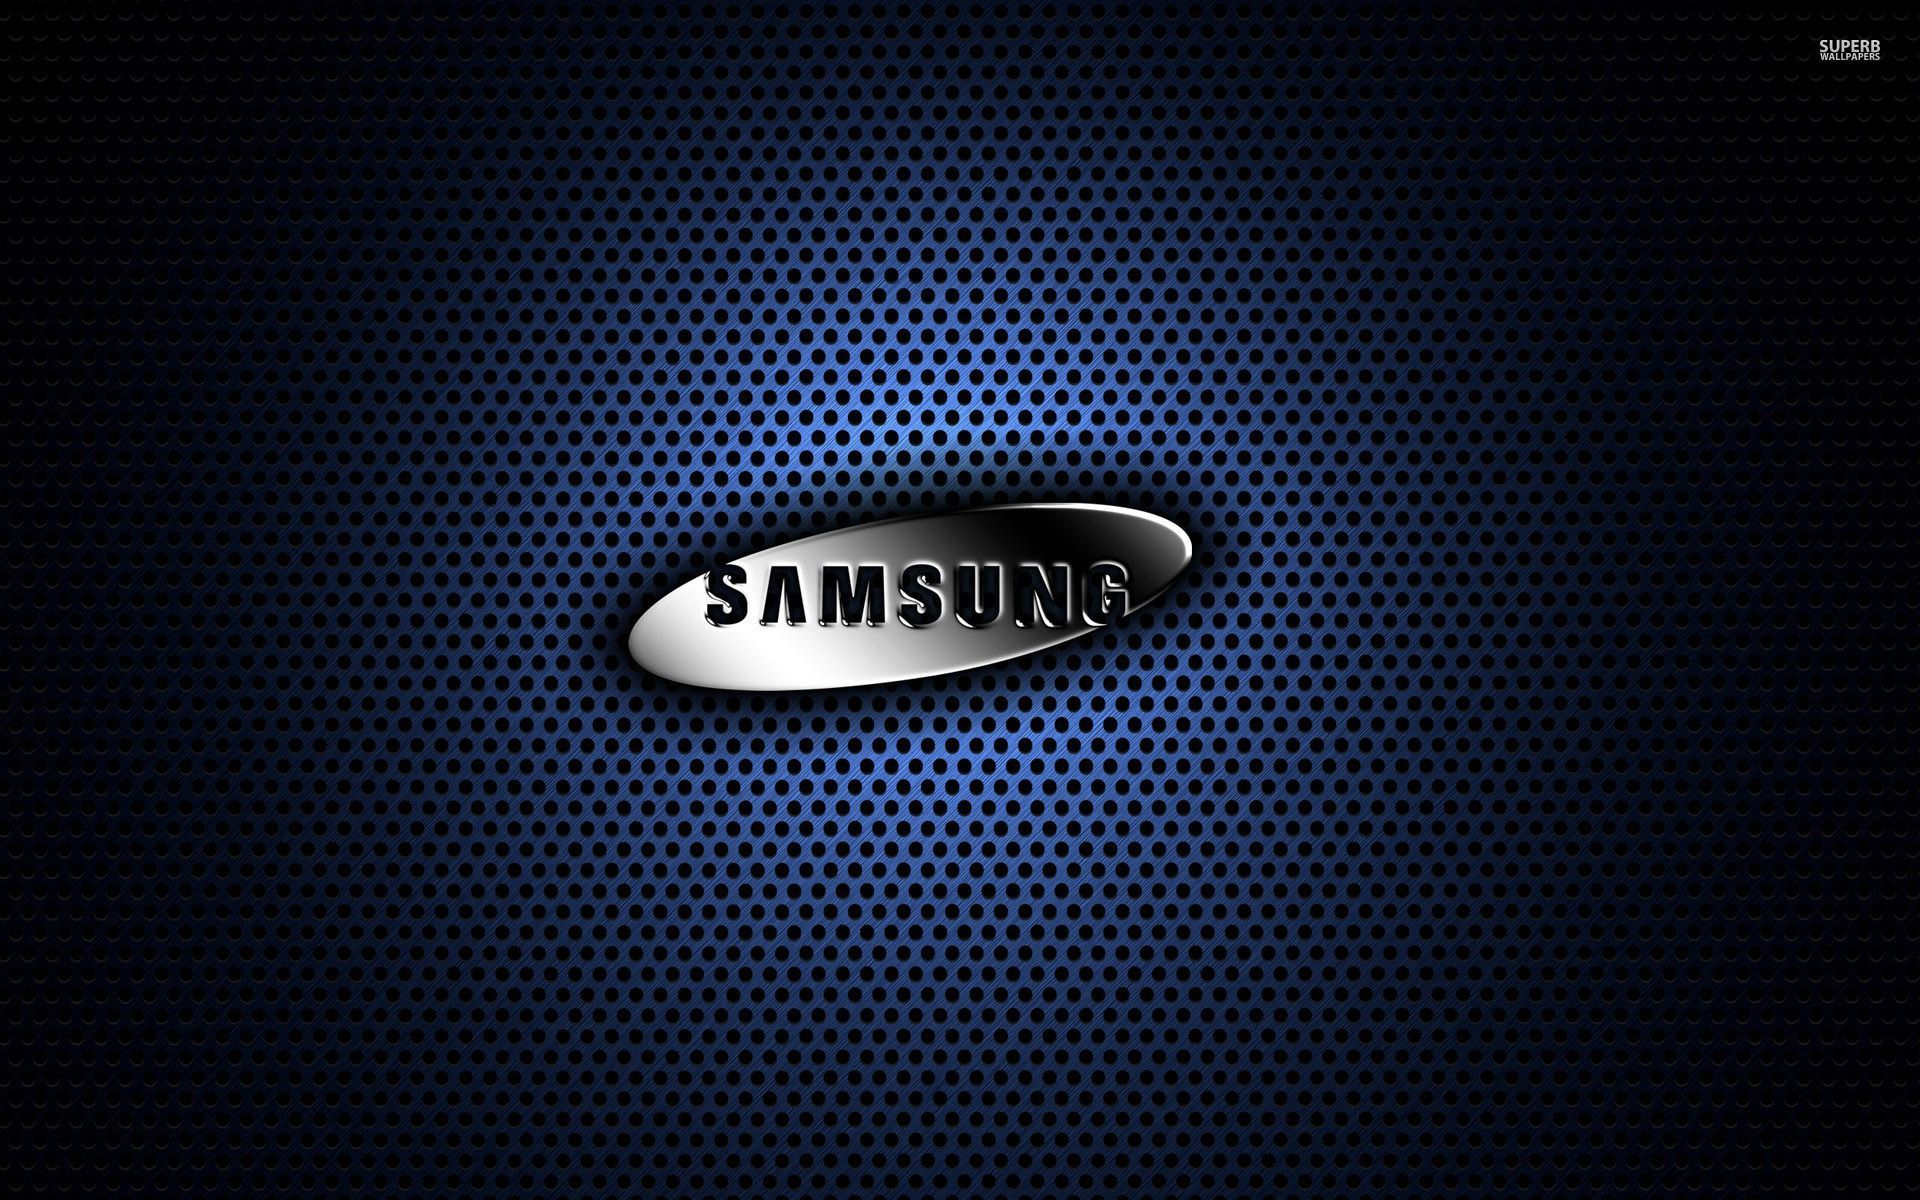 Samsung wallpaper - Computer wallpapers